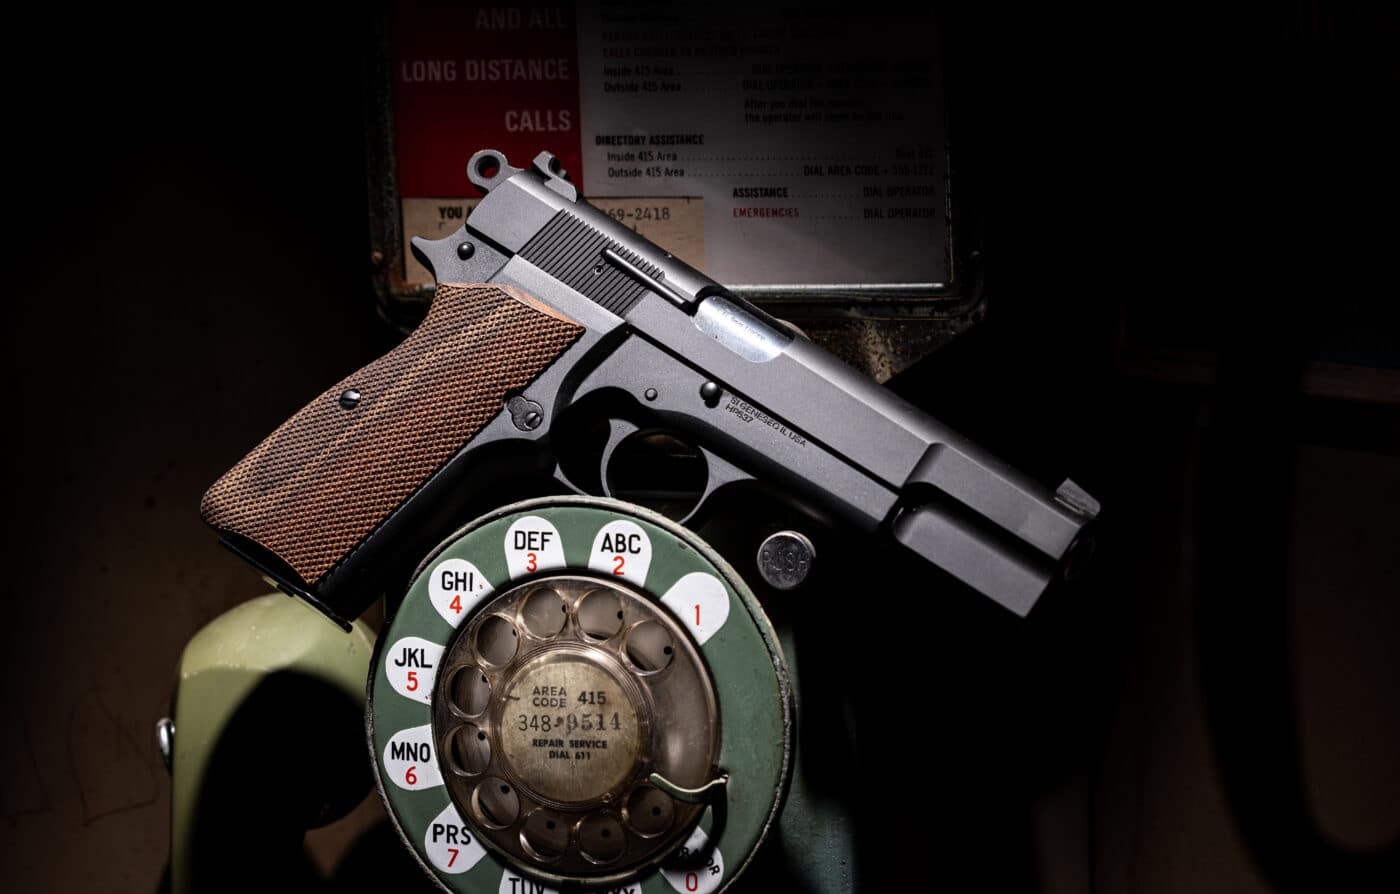 Springfield Armory SA-35 pistol balancing on a rotary phone